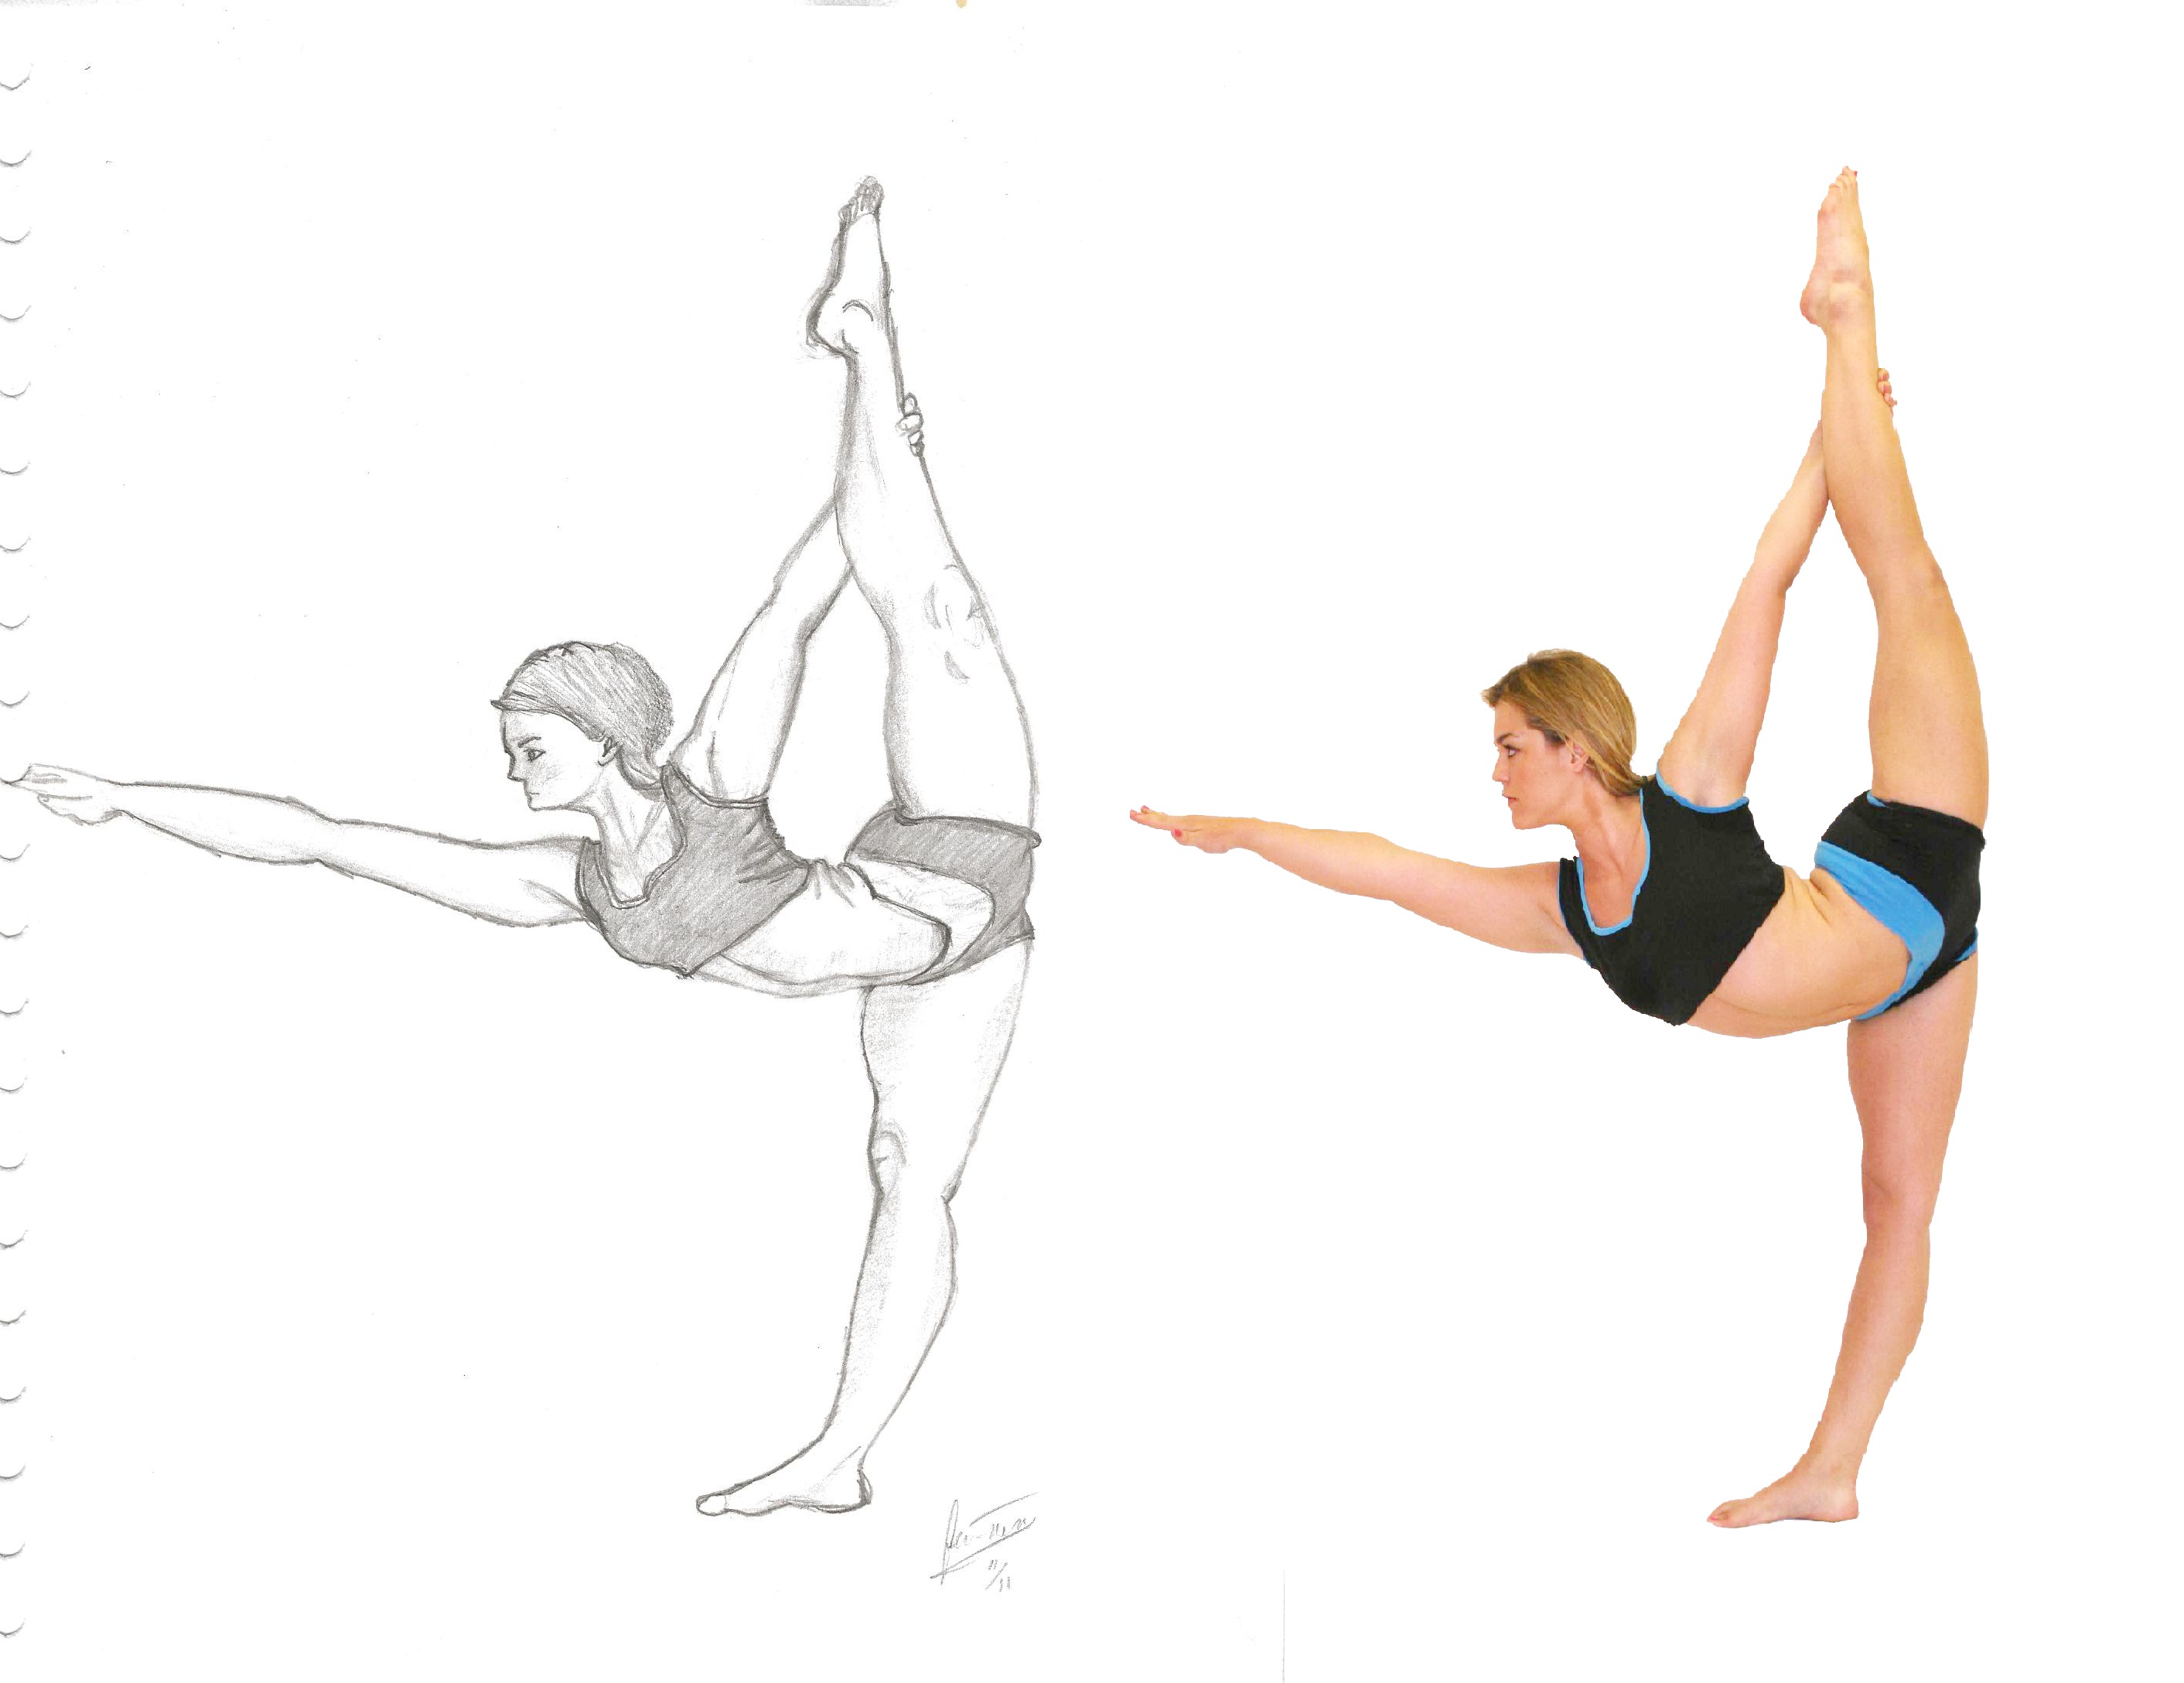 Yoga with comparison sketch by Fenrira on DeviantArt